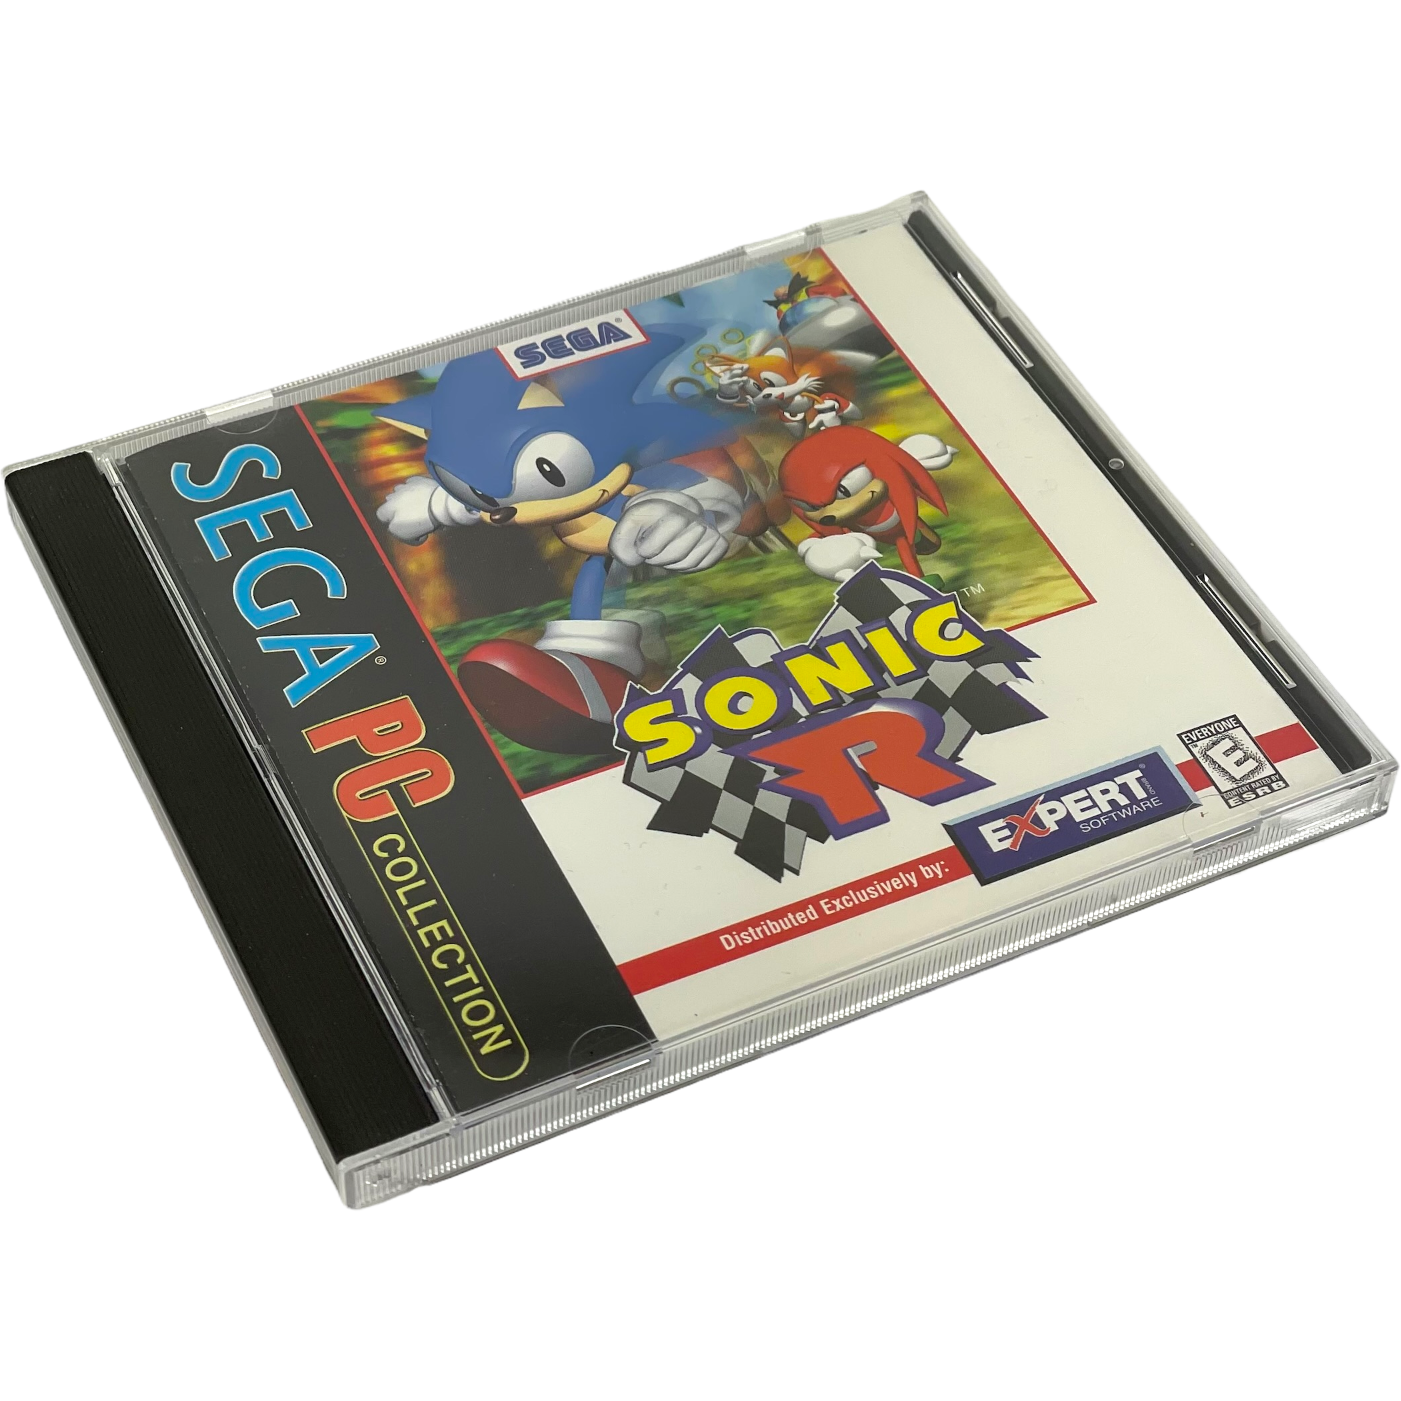 PC - Sonic R